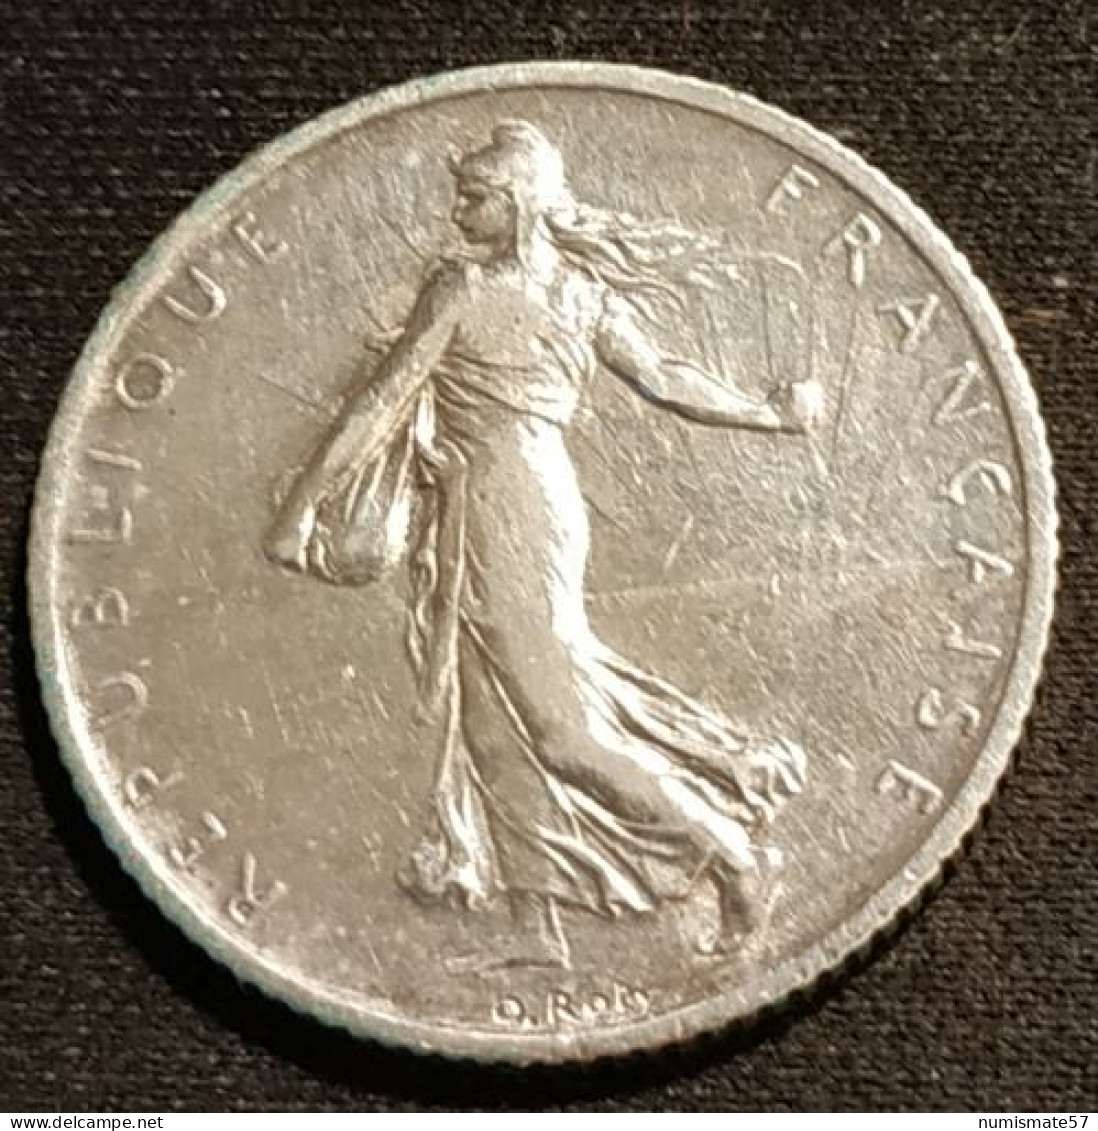 FRANCE - 1 FRANC 1912 - Semeuse - Argent - Silver - Gad 467 - KM 844 - 1 Franc